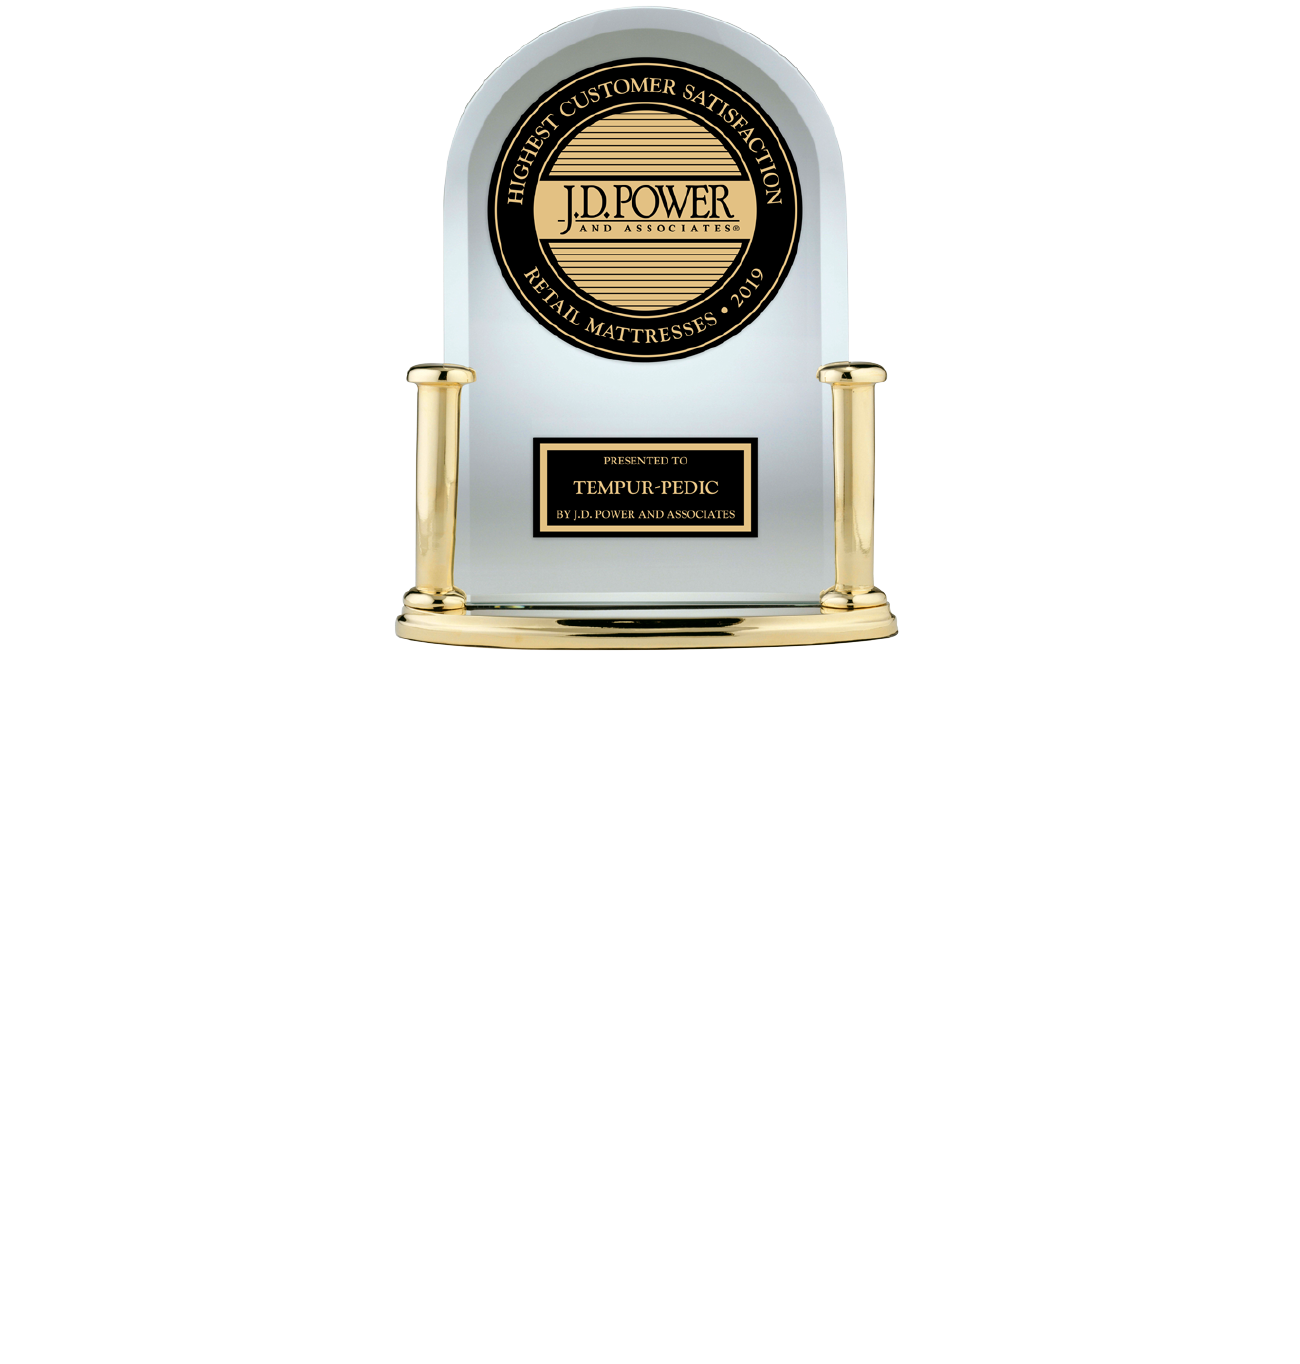 JDPower Award - #1 in customer satisfaction